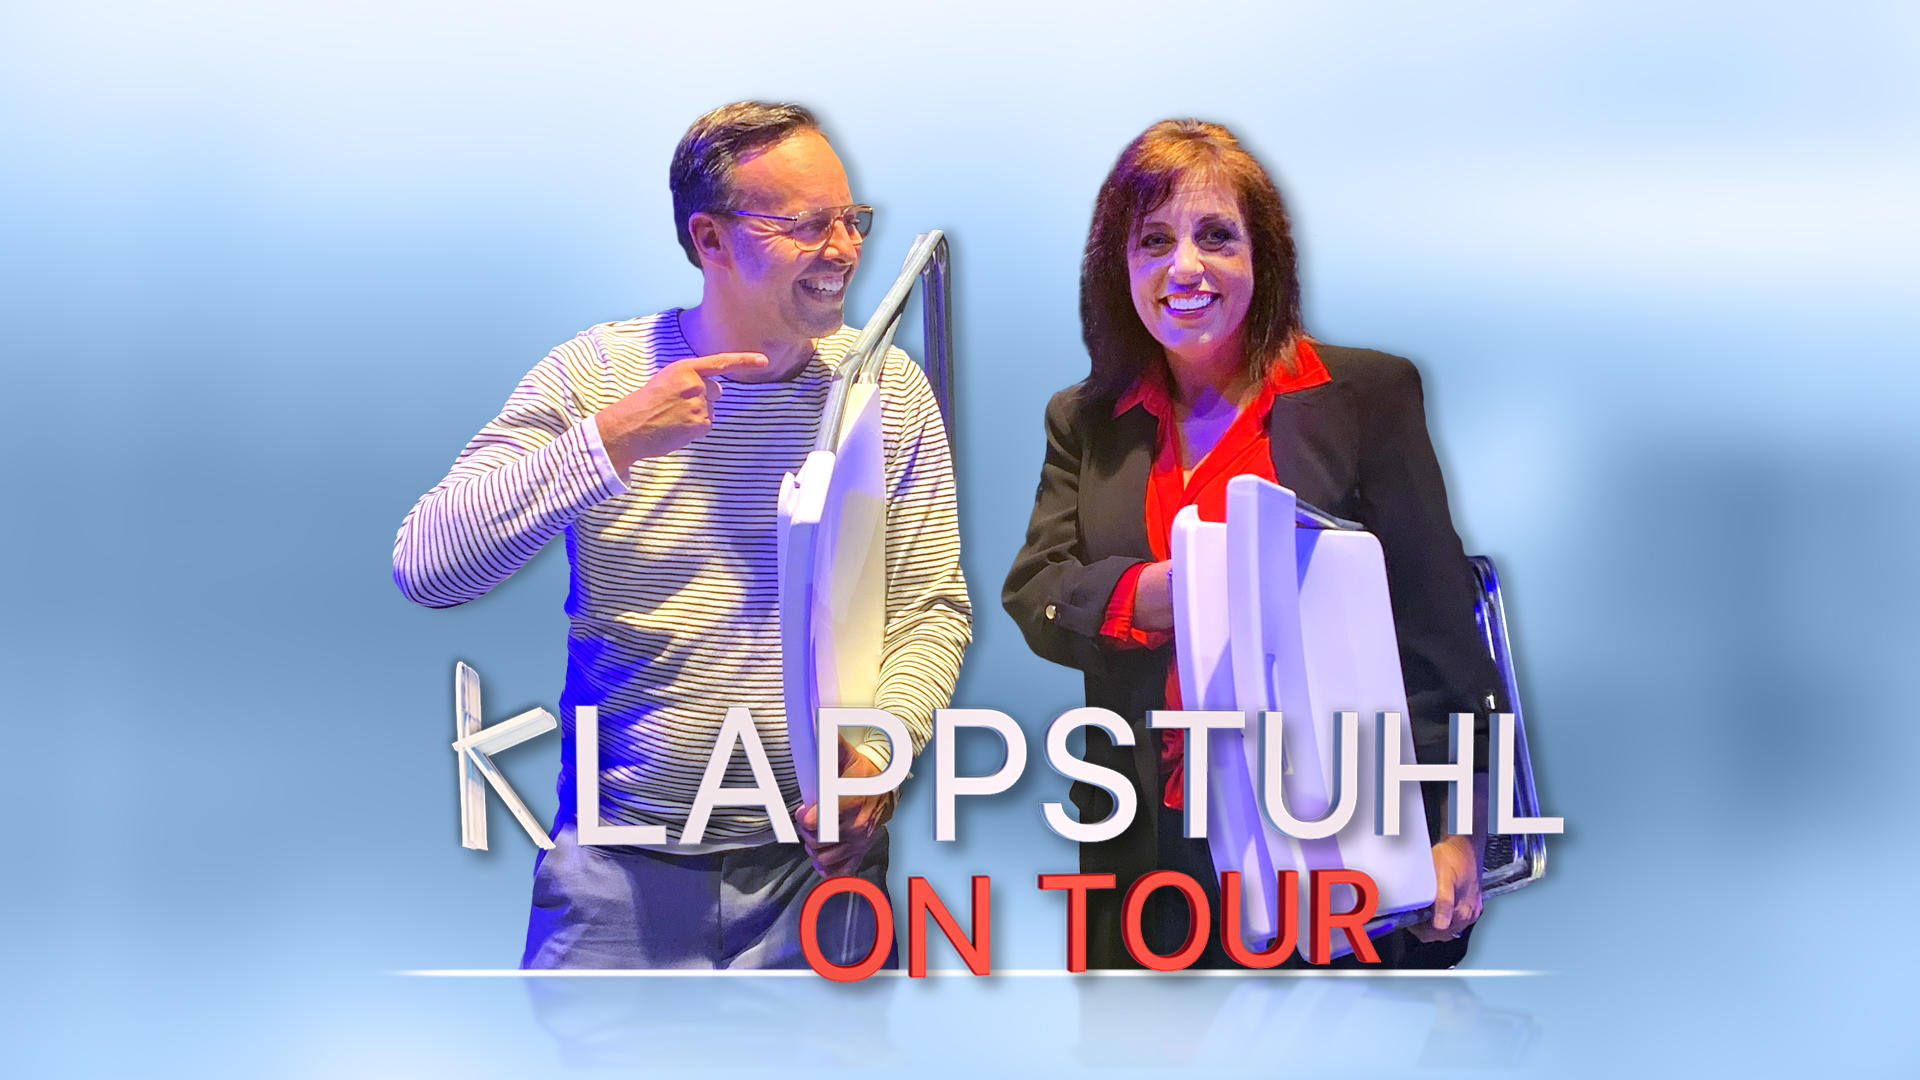 Till Quitmann trifft Starlight-Star Klappstuhl on Tour